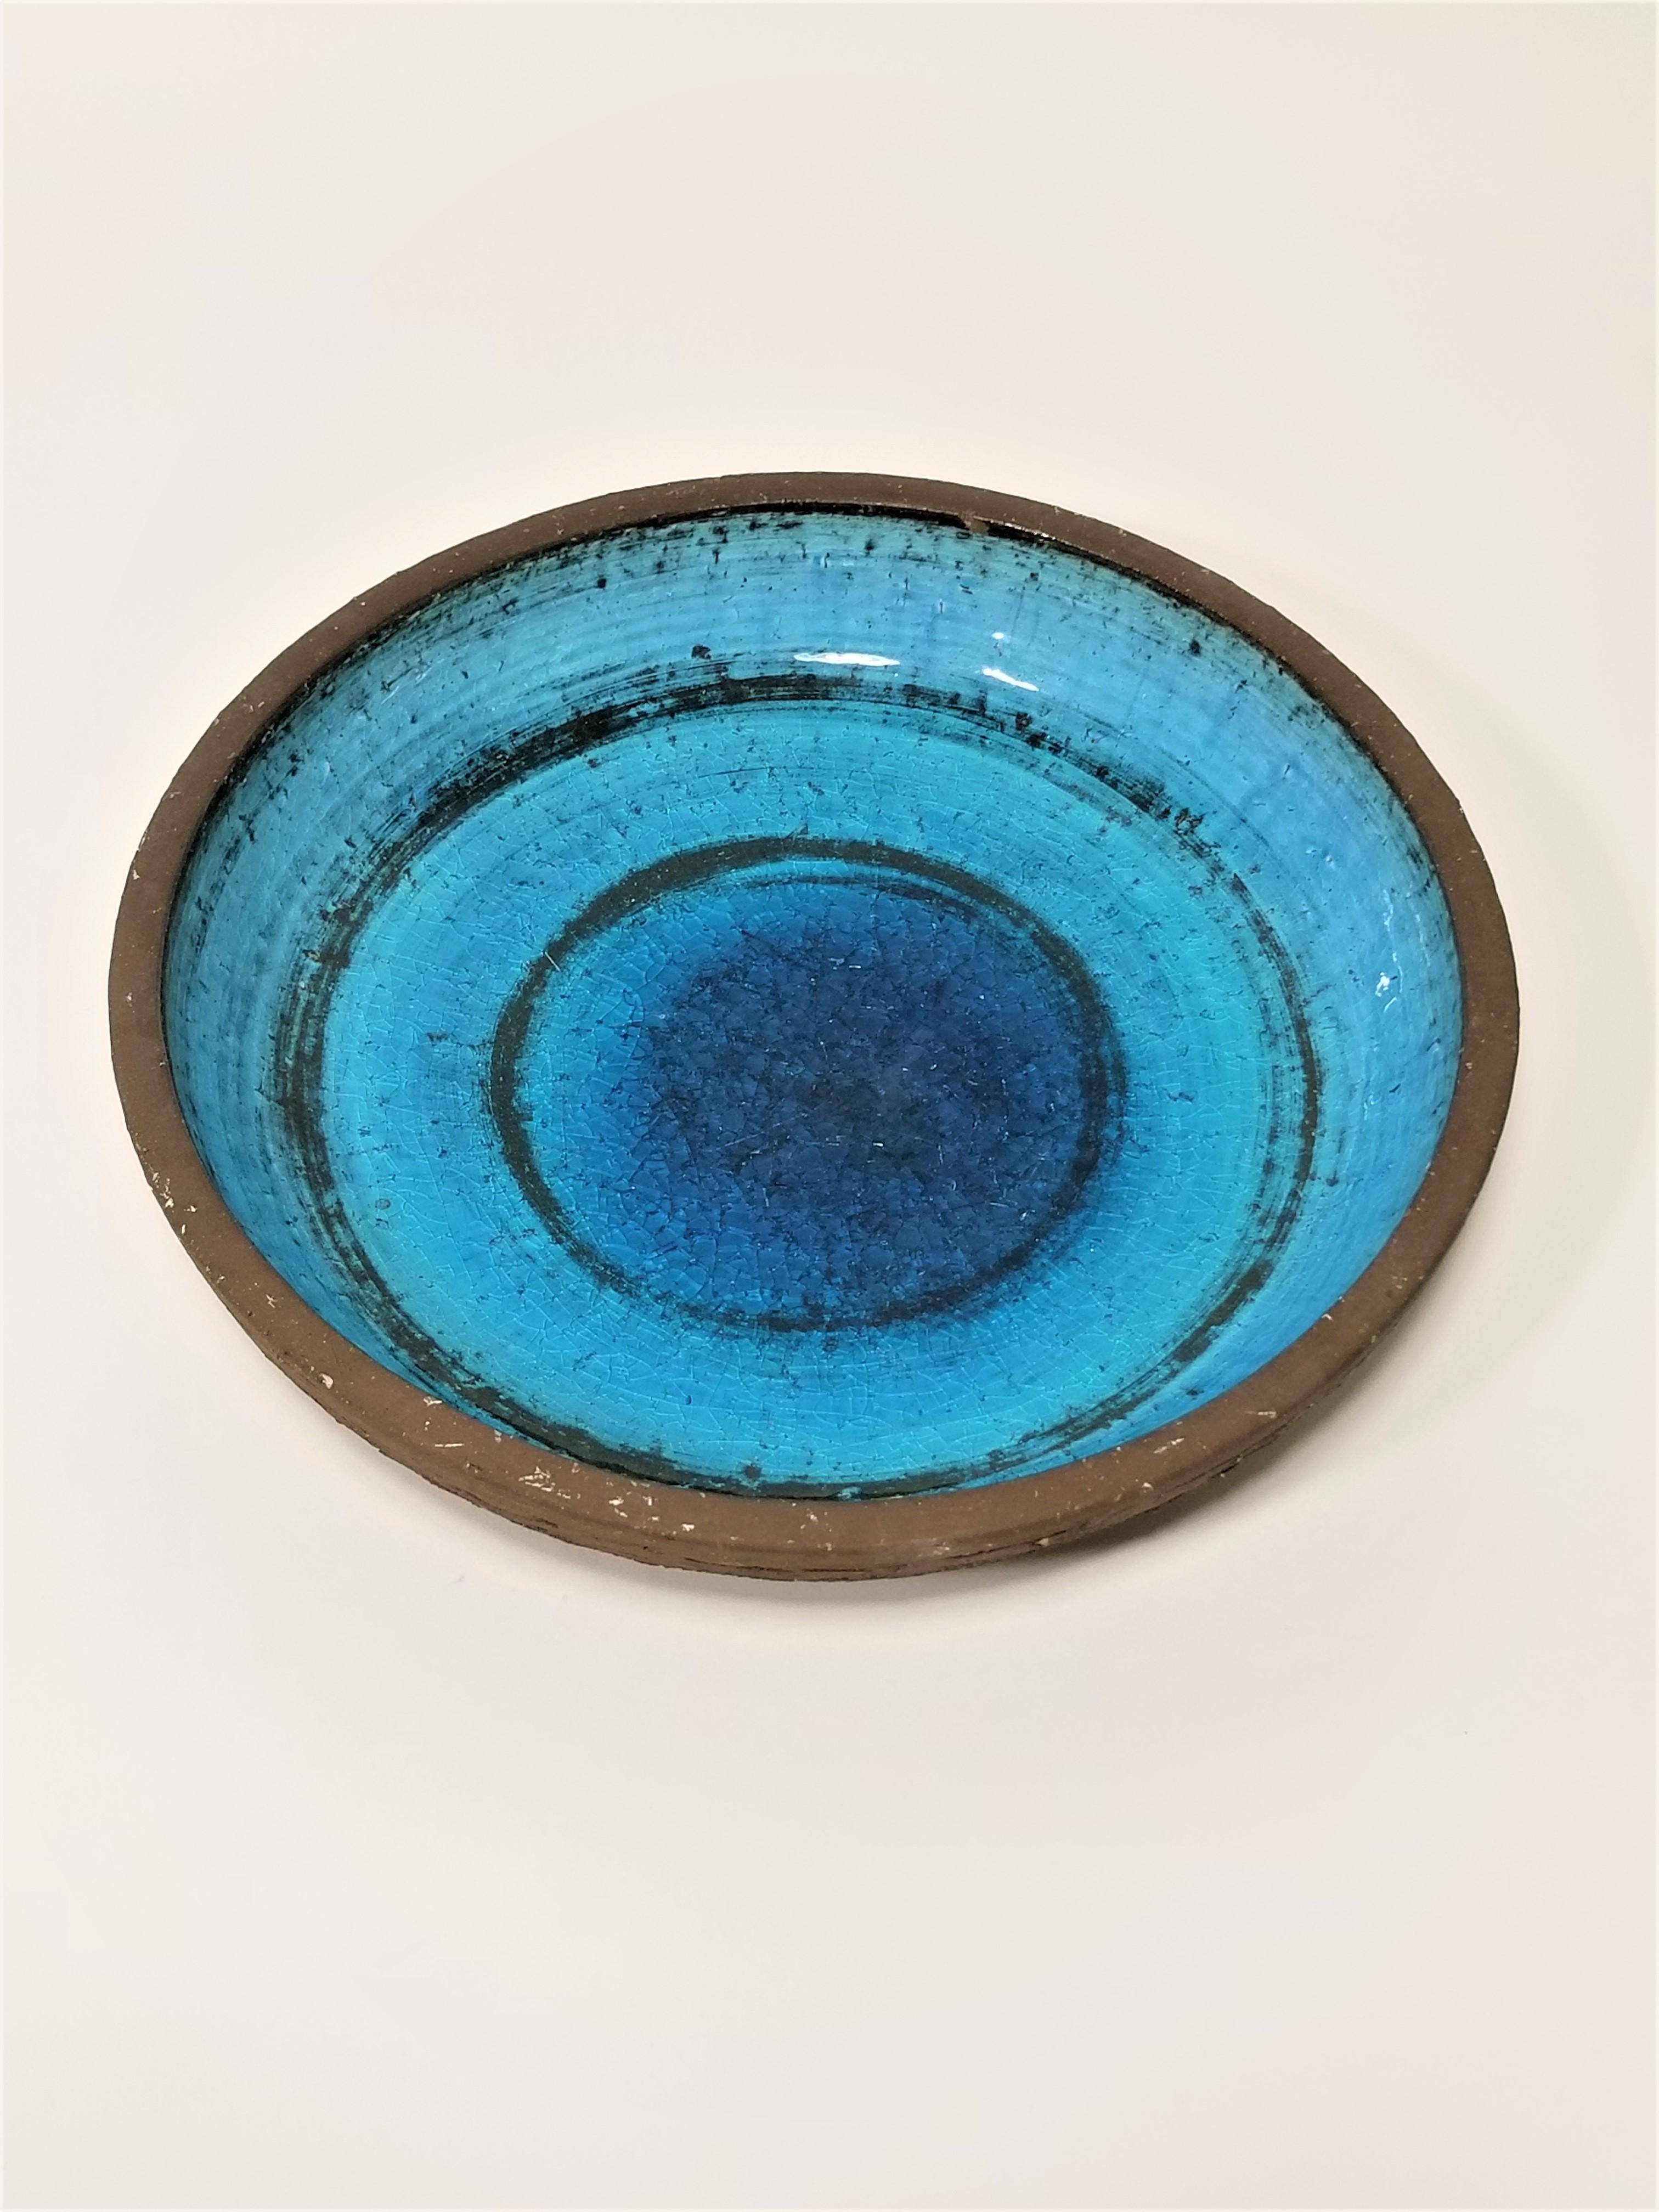 Glazed pottery bowl made in Germany midcentury
Signed:
Kunsthandlung
W. Welker
Heidelberg.